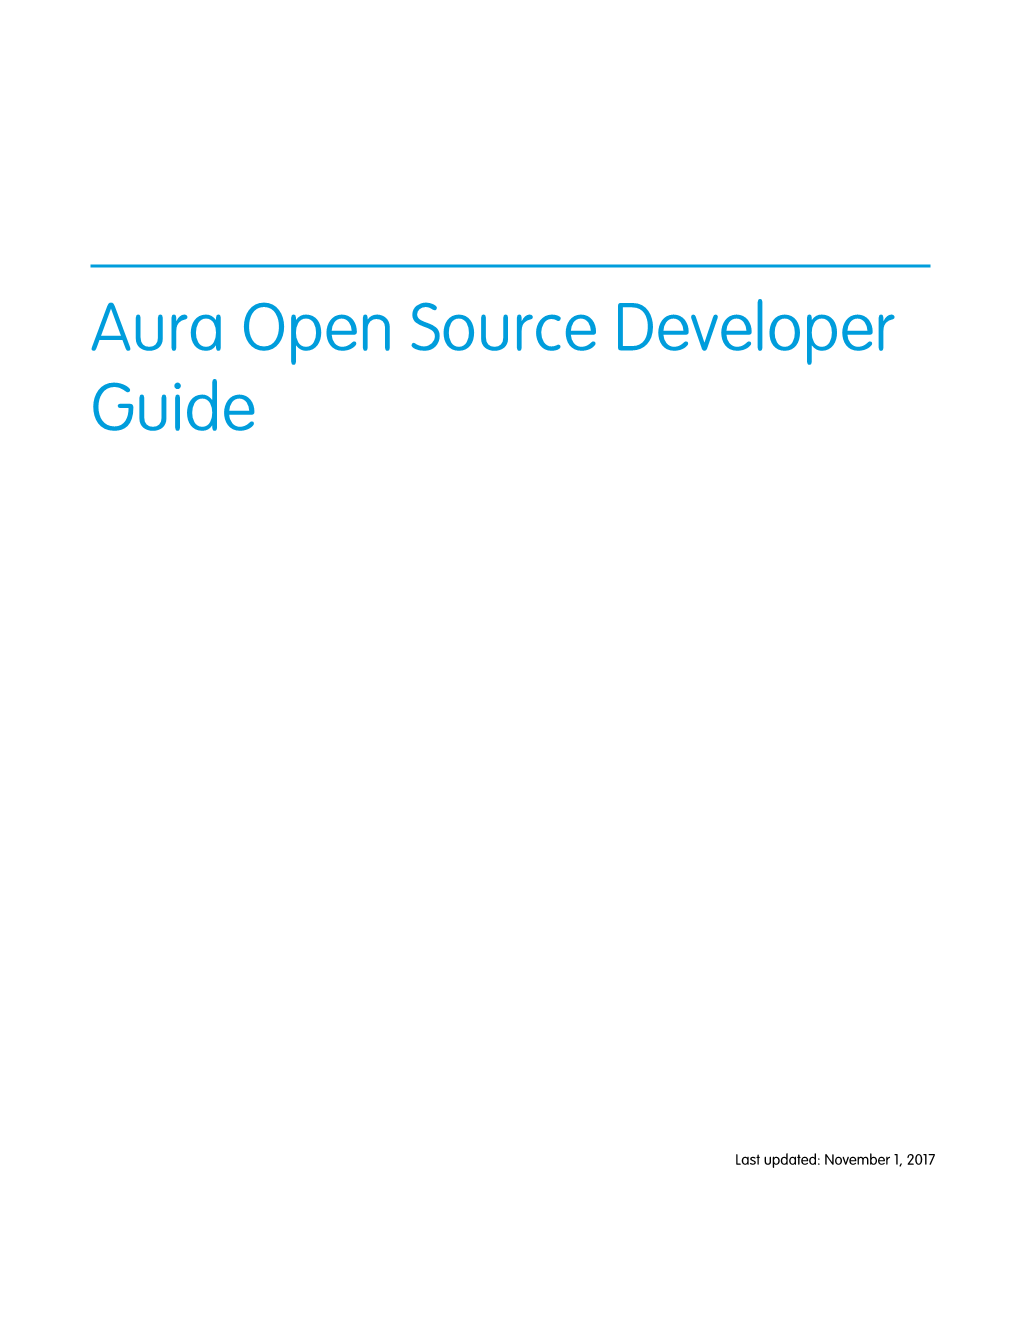 Aura Open Source Developer Guide